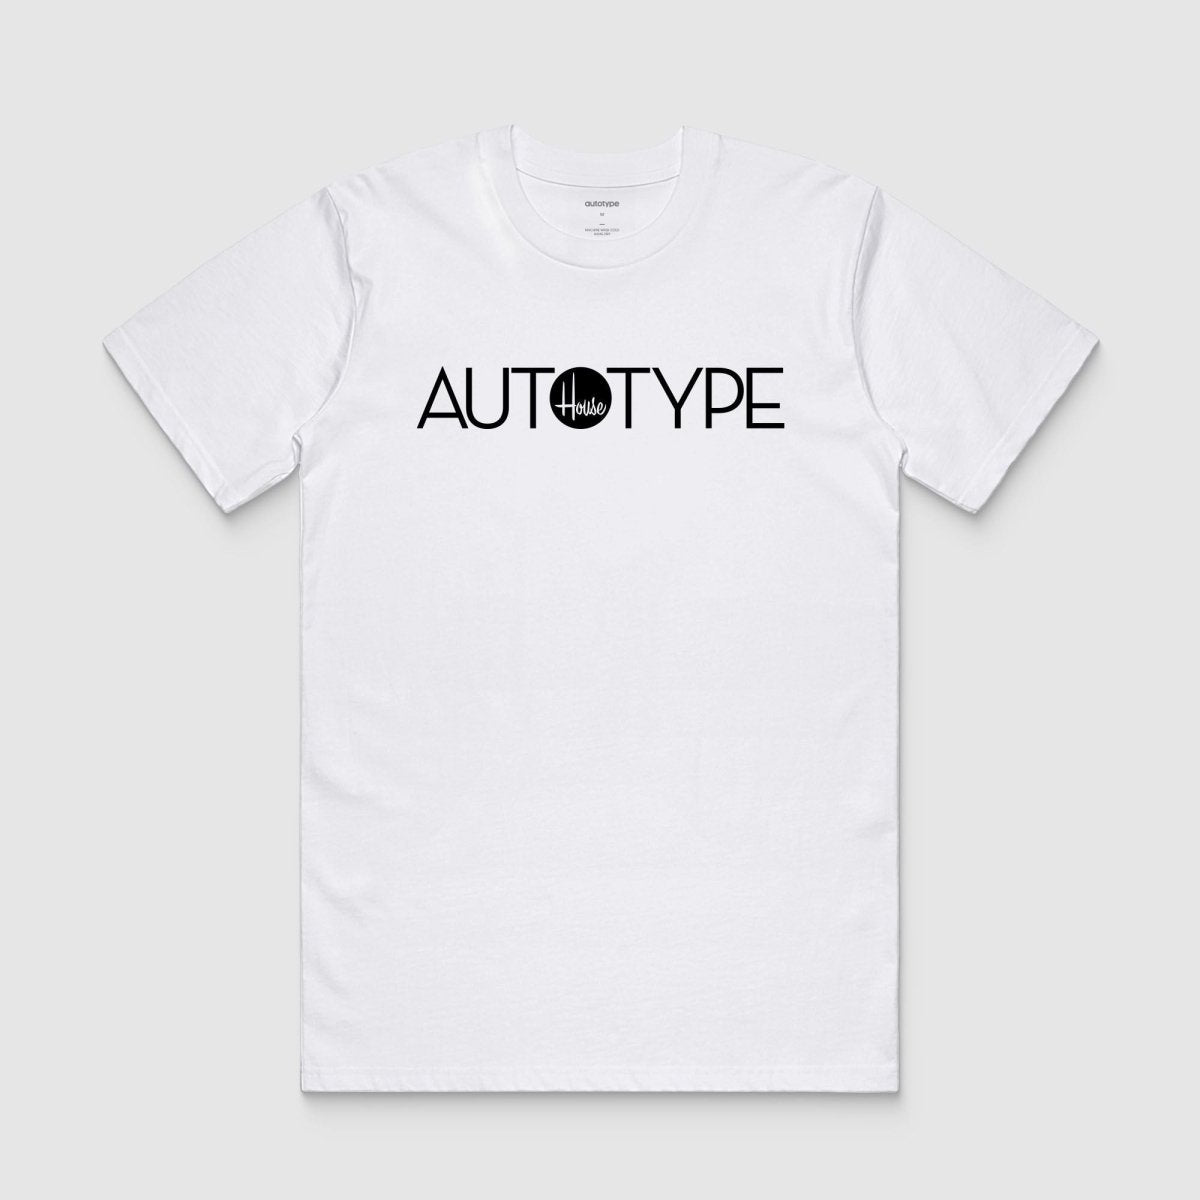 House Industries Neutratype Tee - Autotype